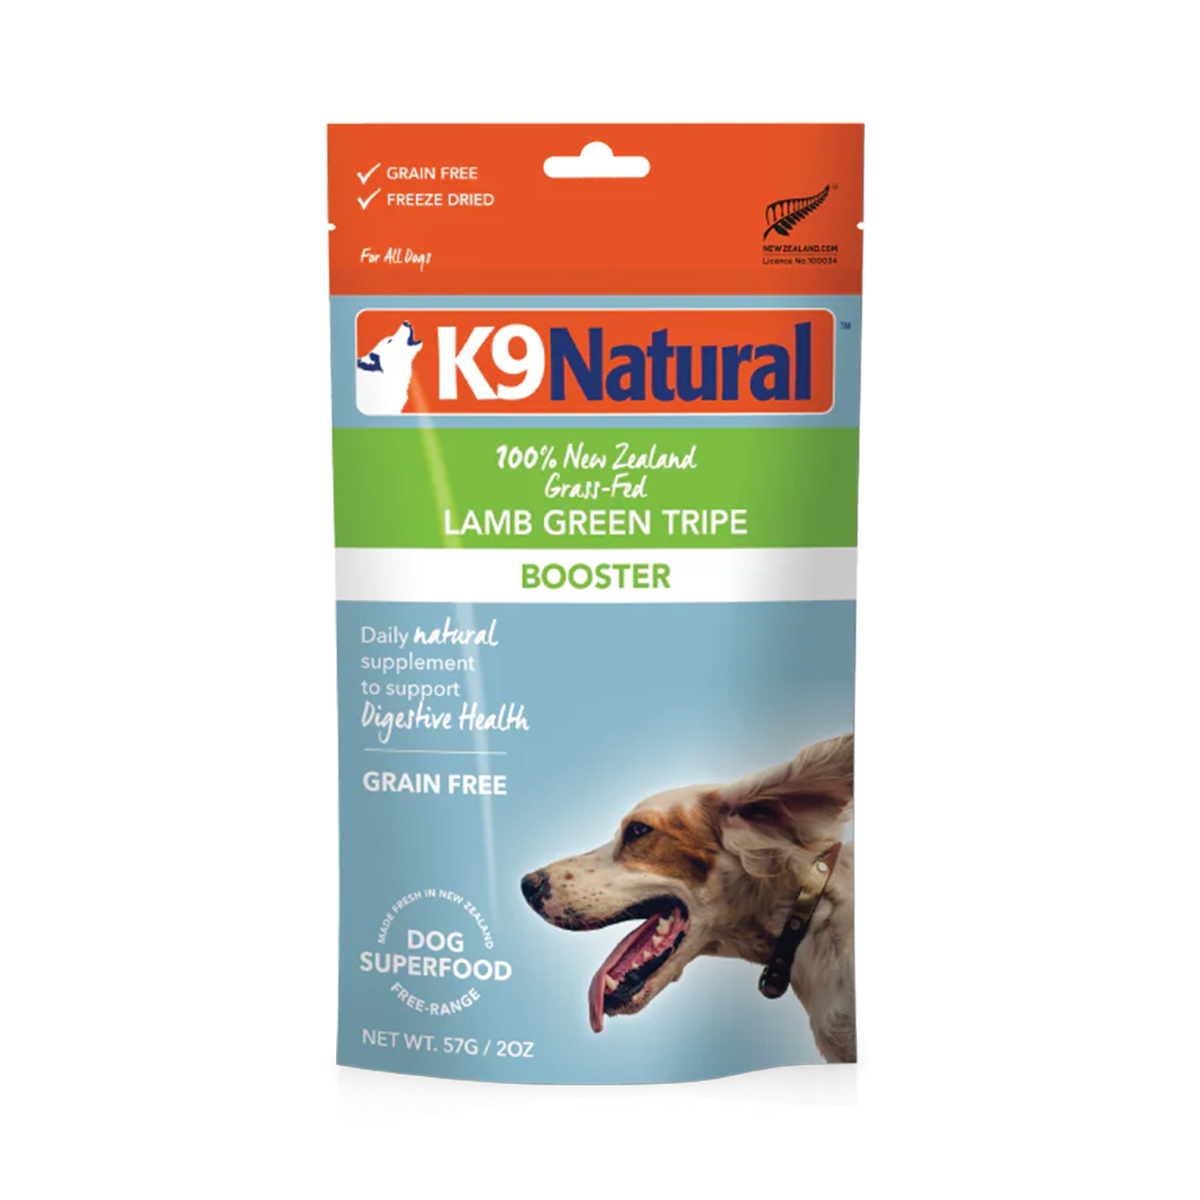 K9 Natural Freeze-Dried Dog Food Booster - Lamb Green Tripe